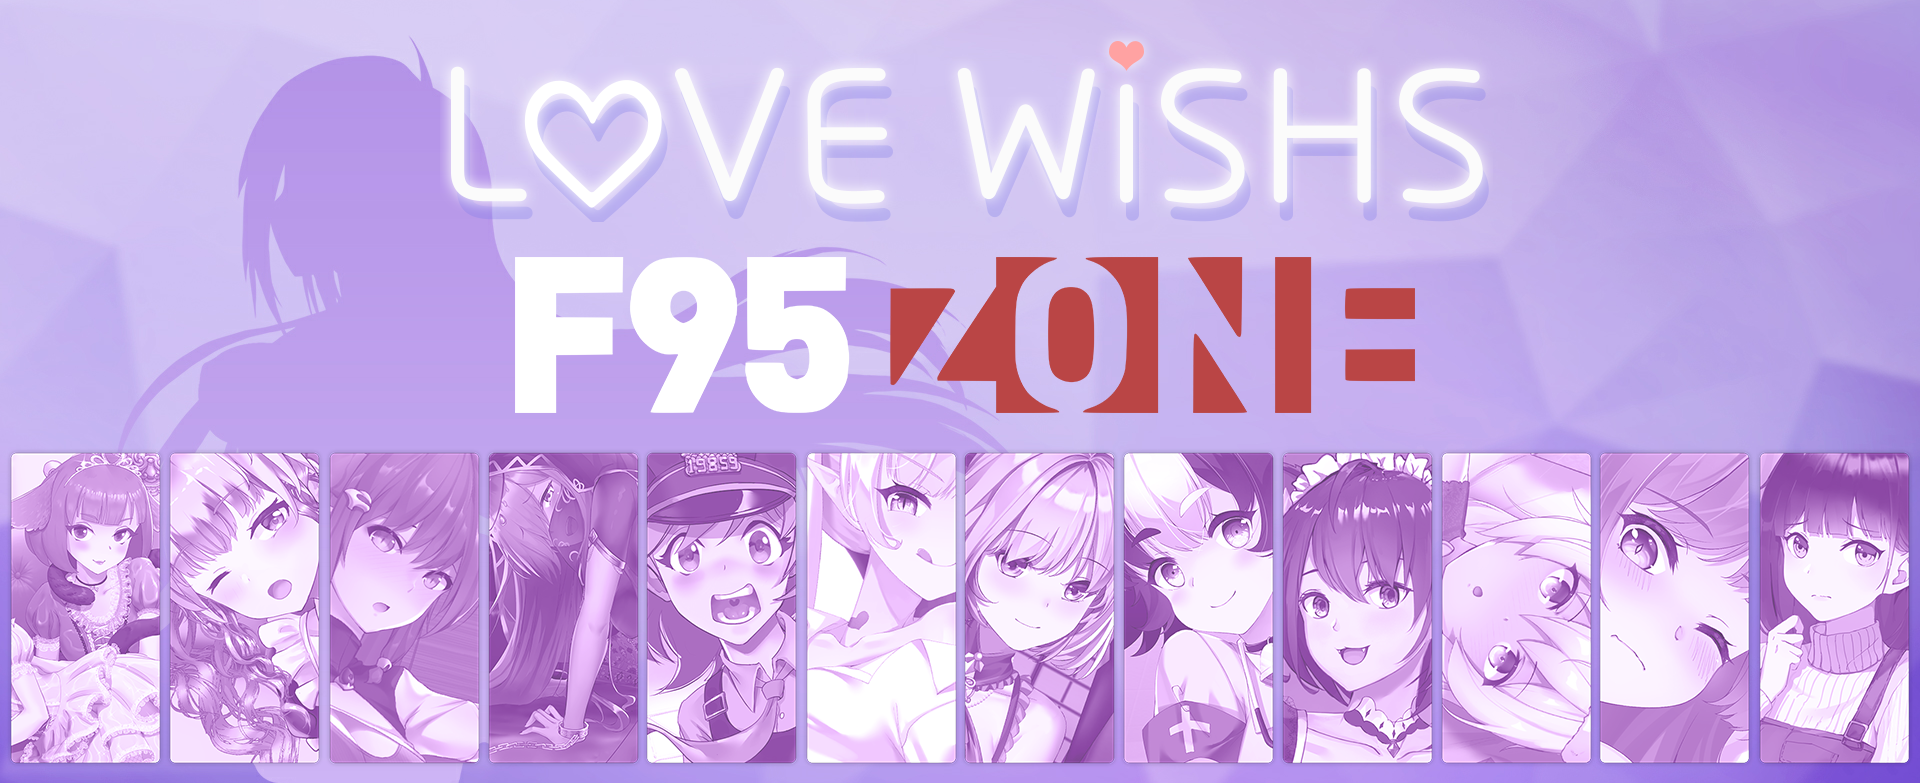 Love wish poster